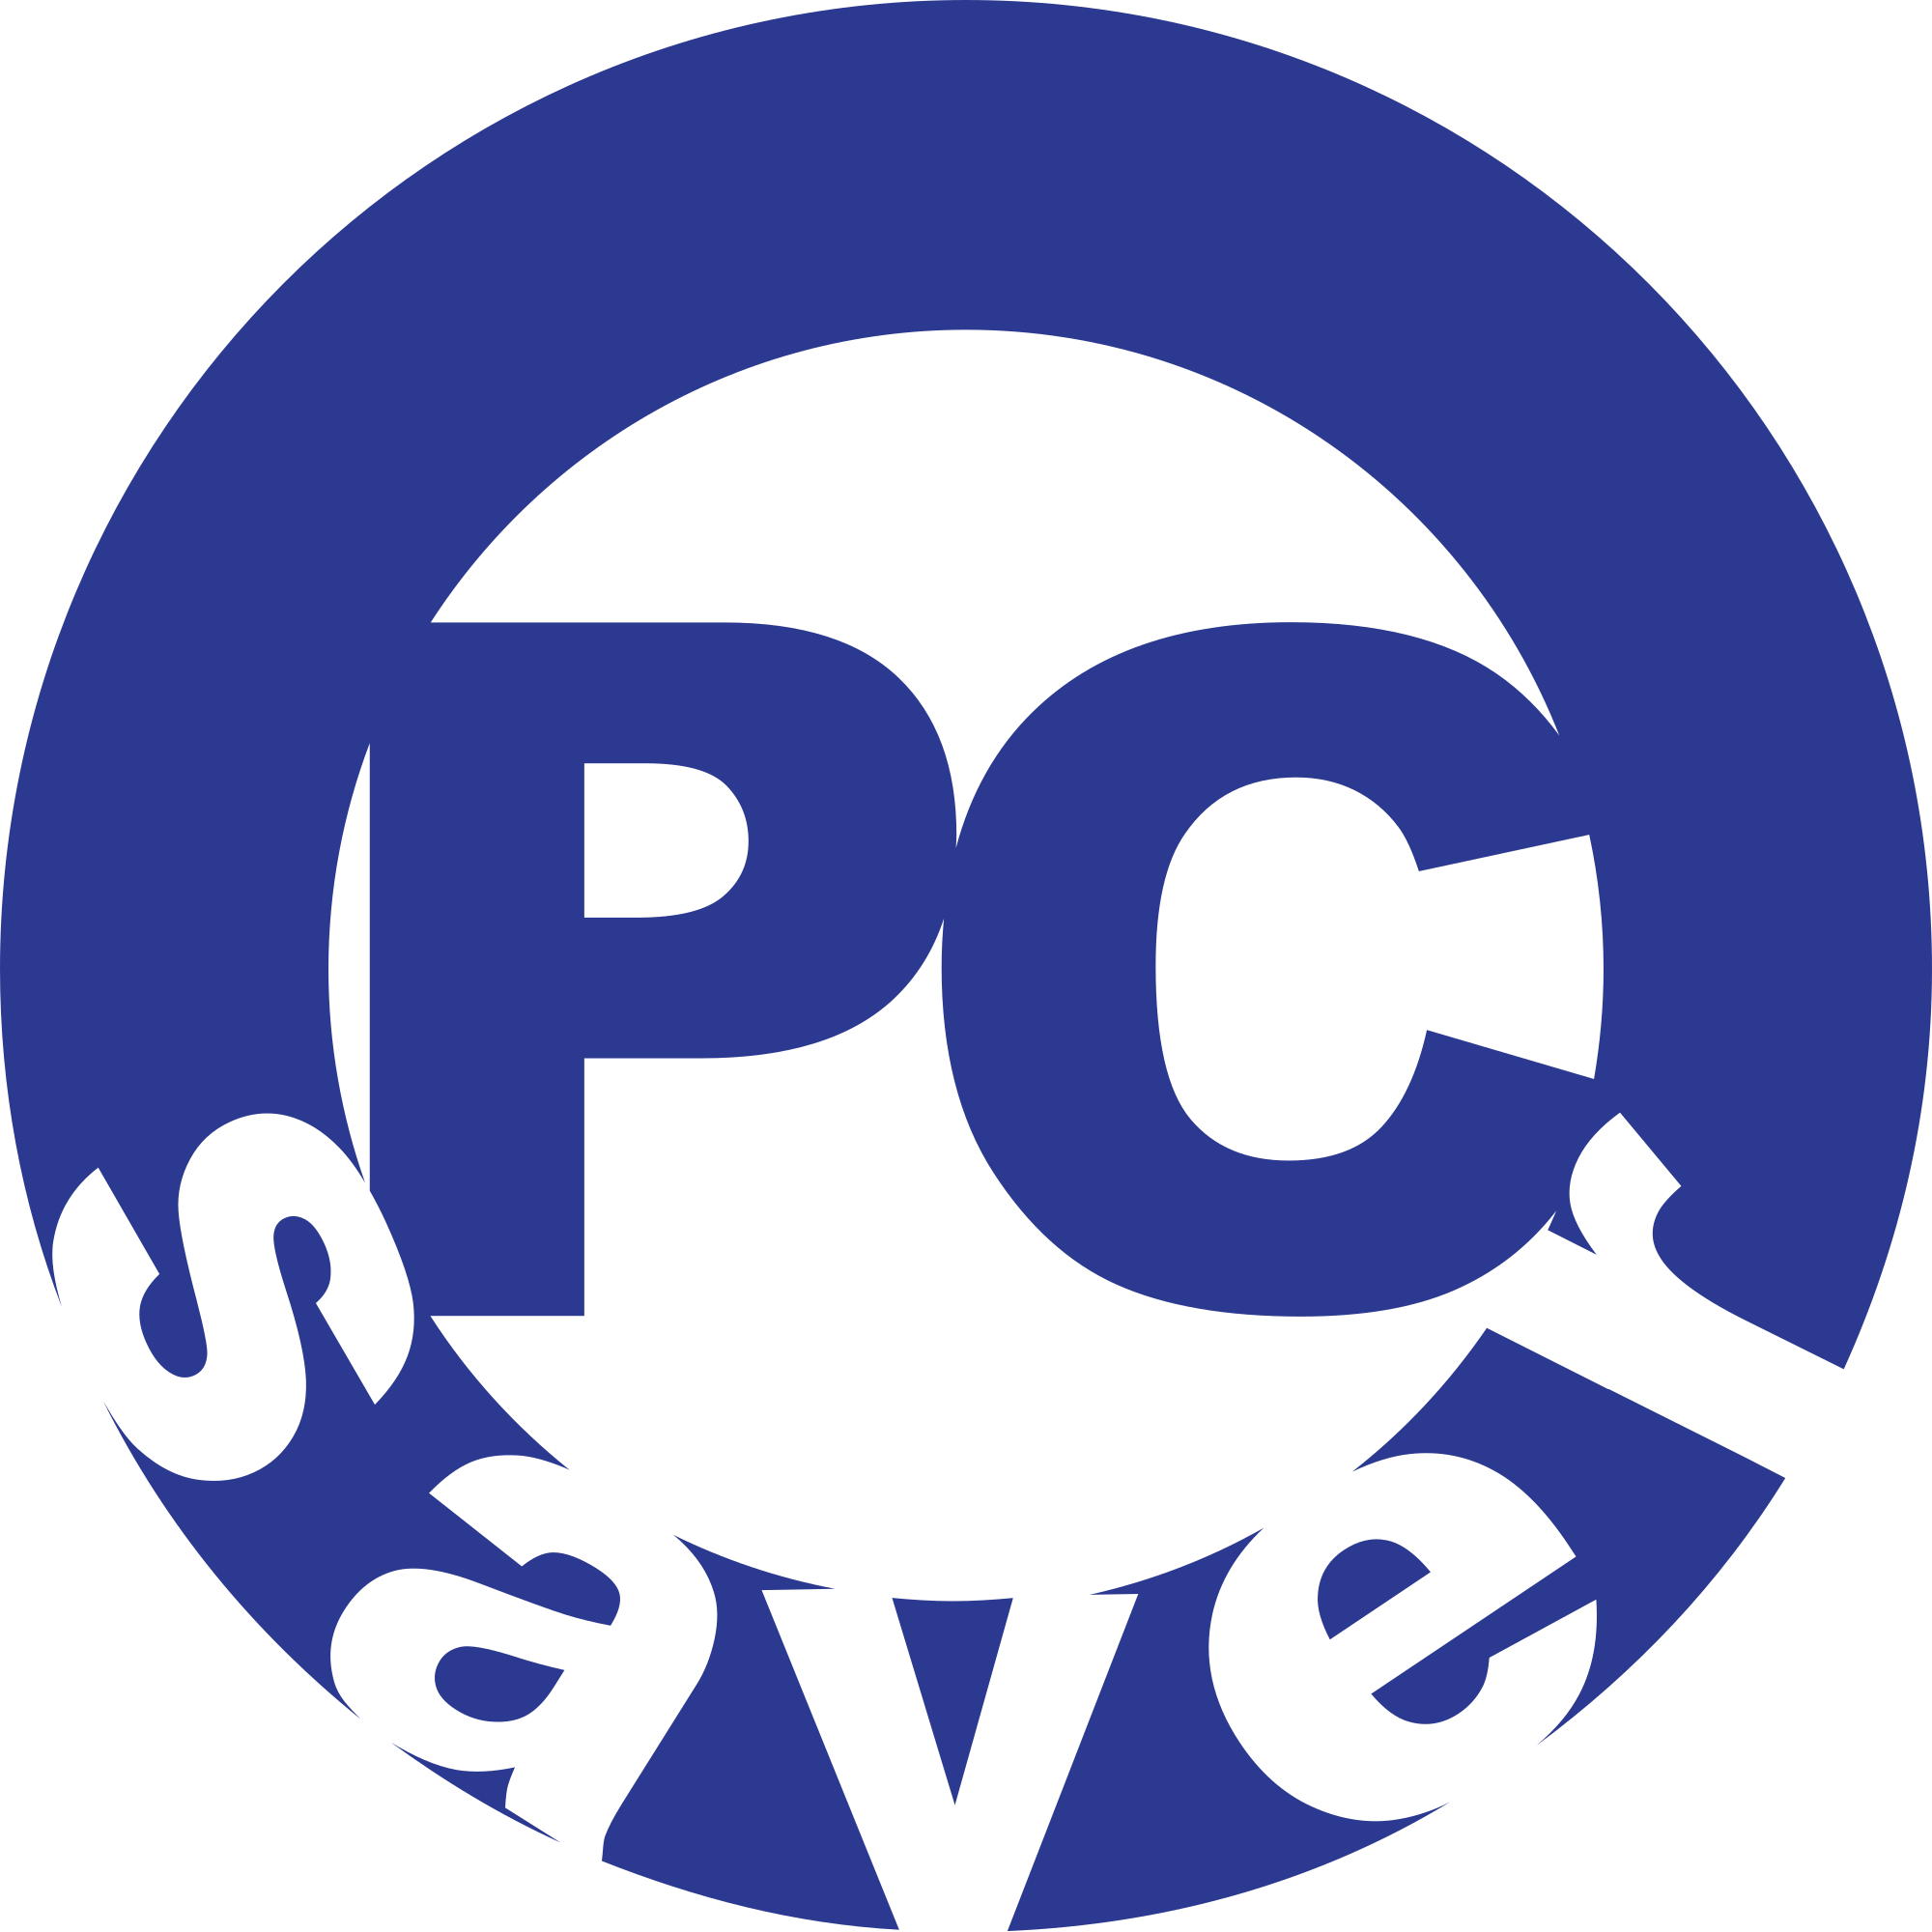 PC SAVER